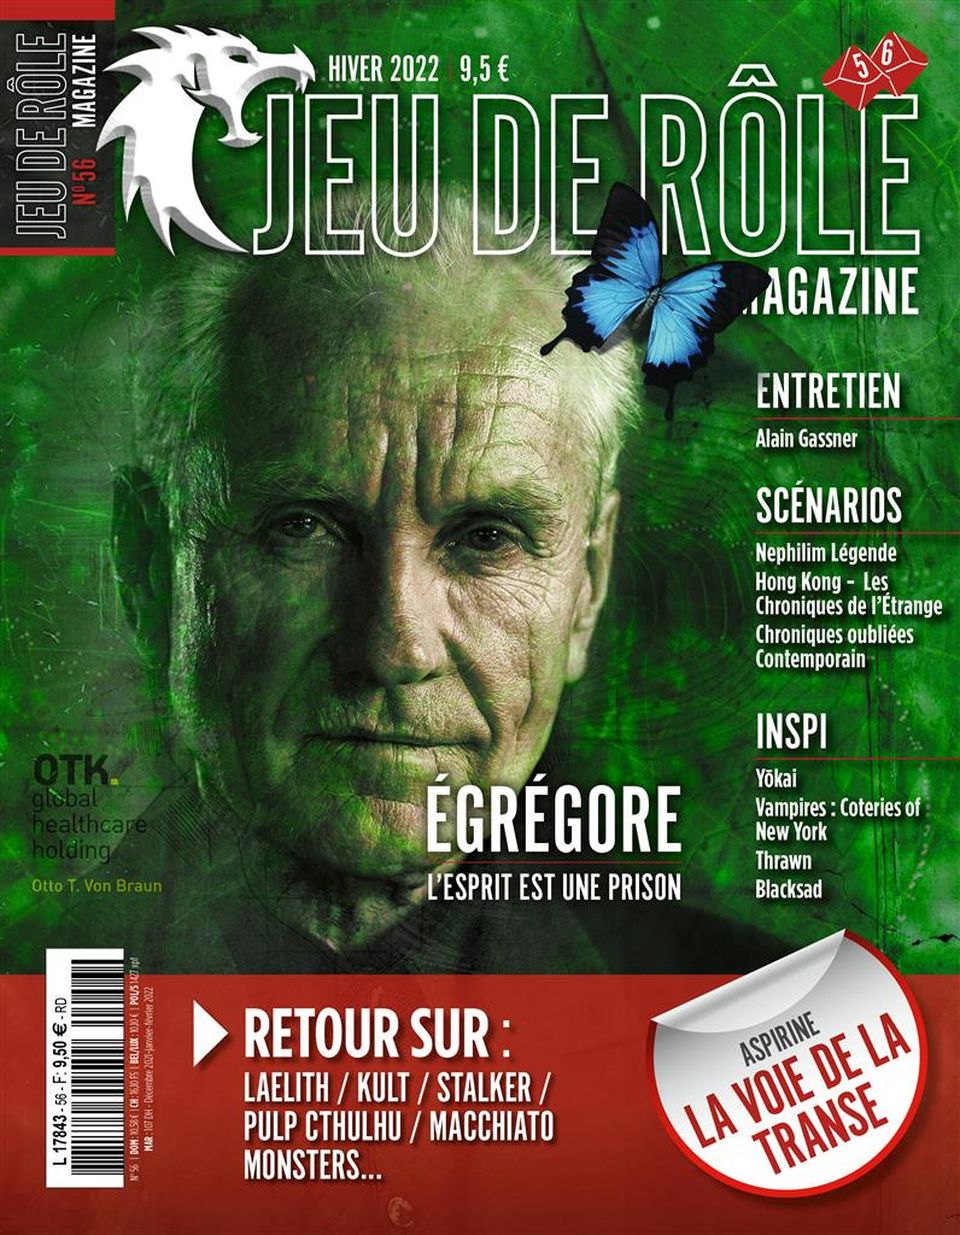 Jeu de Rôle Magazine #56 image